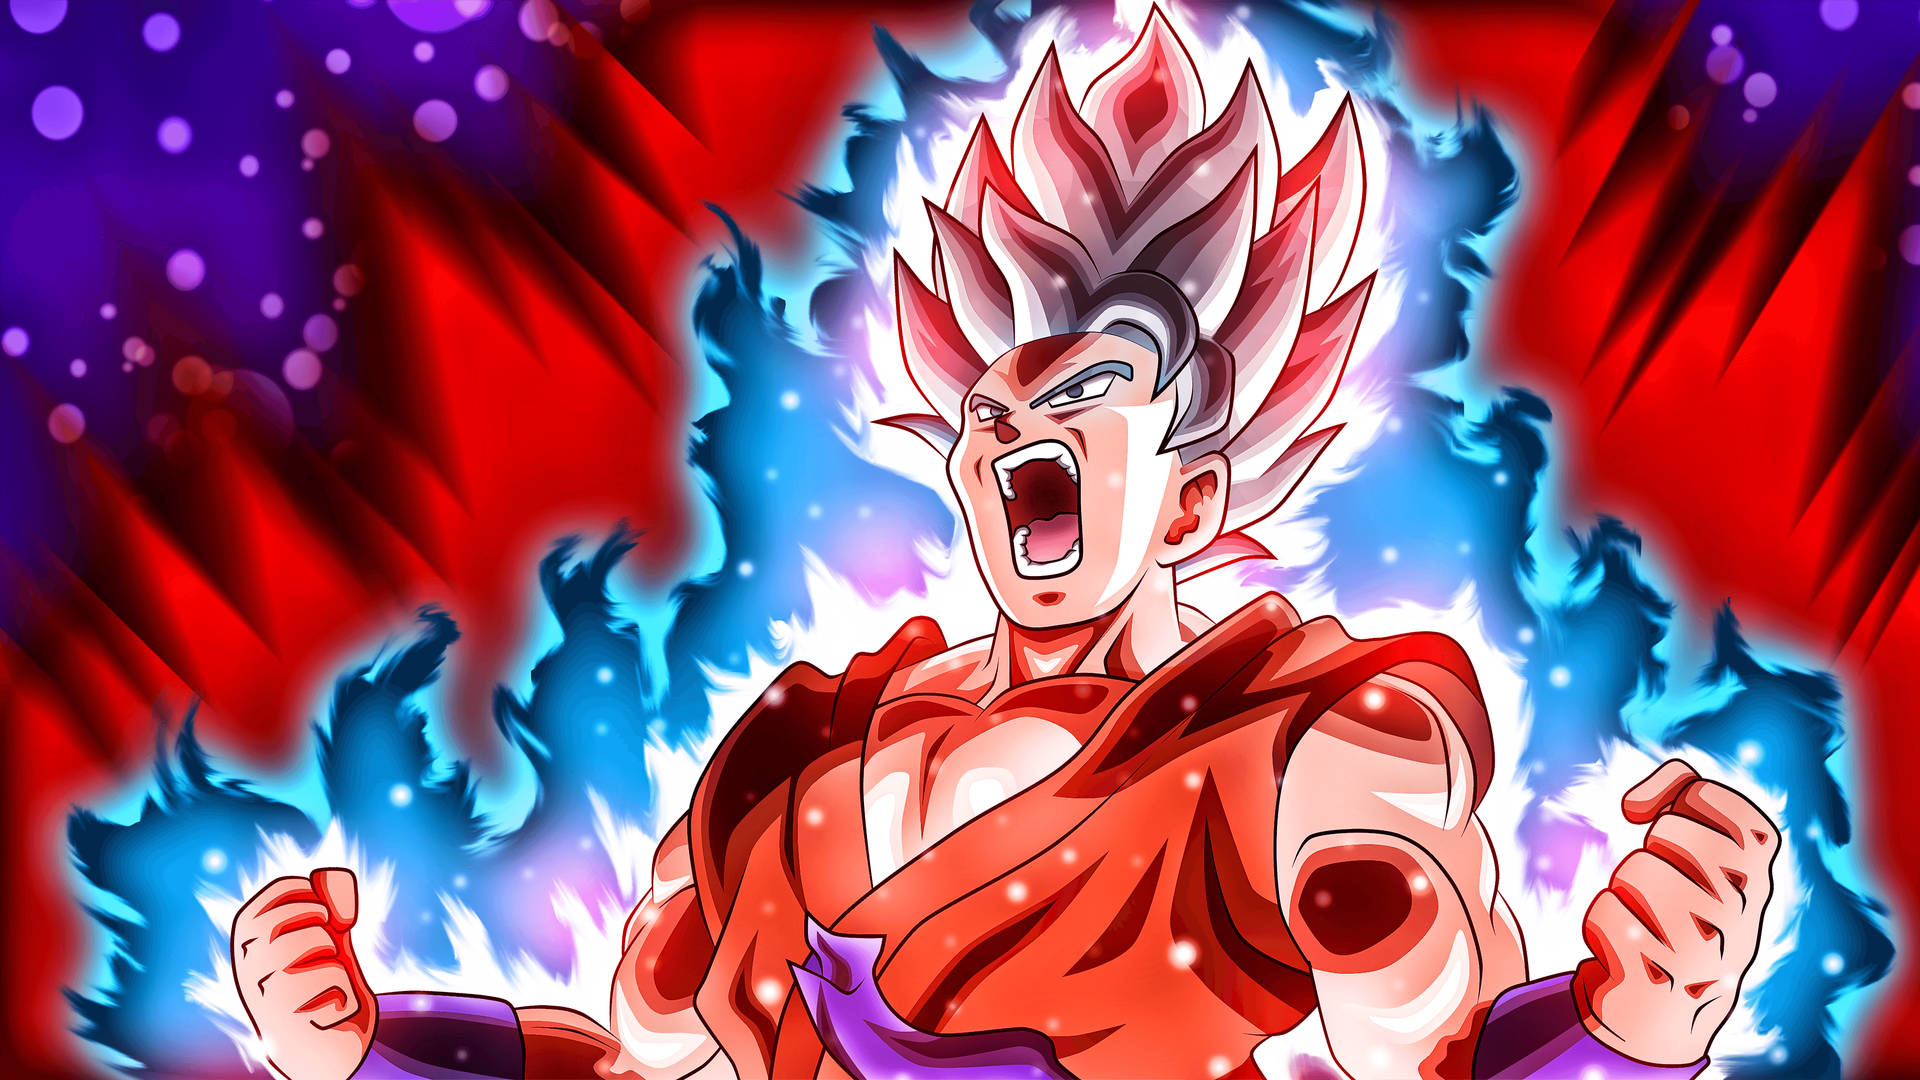 Download Goku Full Energy Kaioken Form Wallpaper 